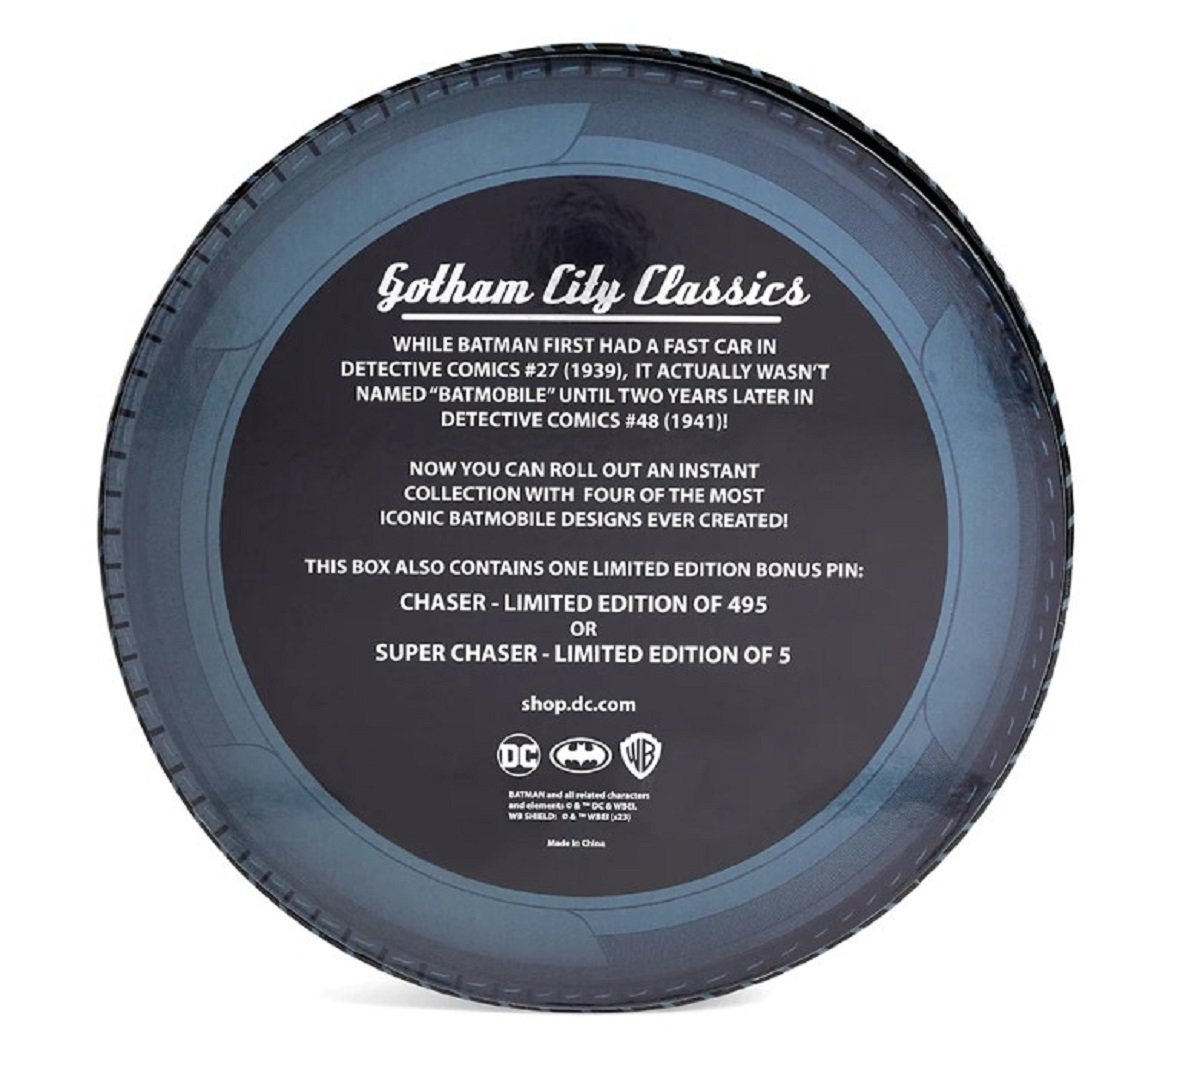 Batman Gotham City Classics Batmobile Exclusive Limited Edition Pin Set back packaging.